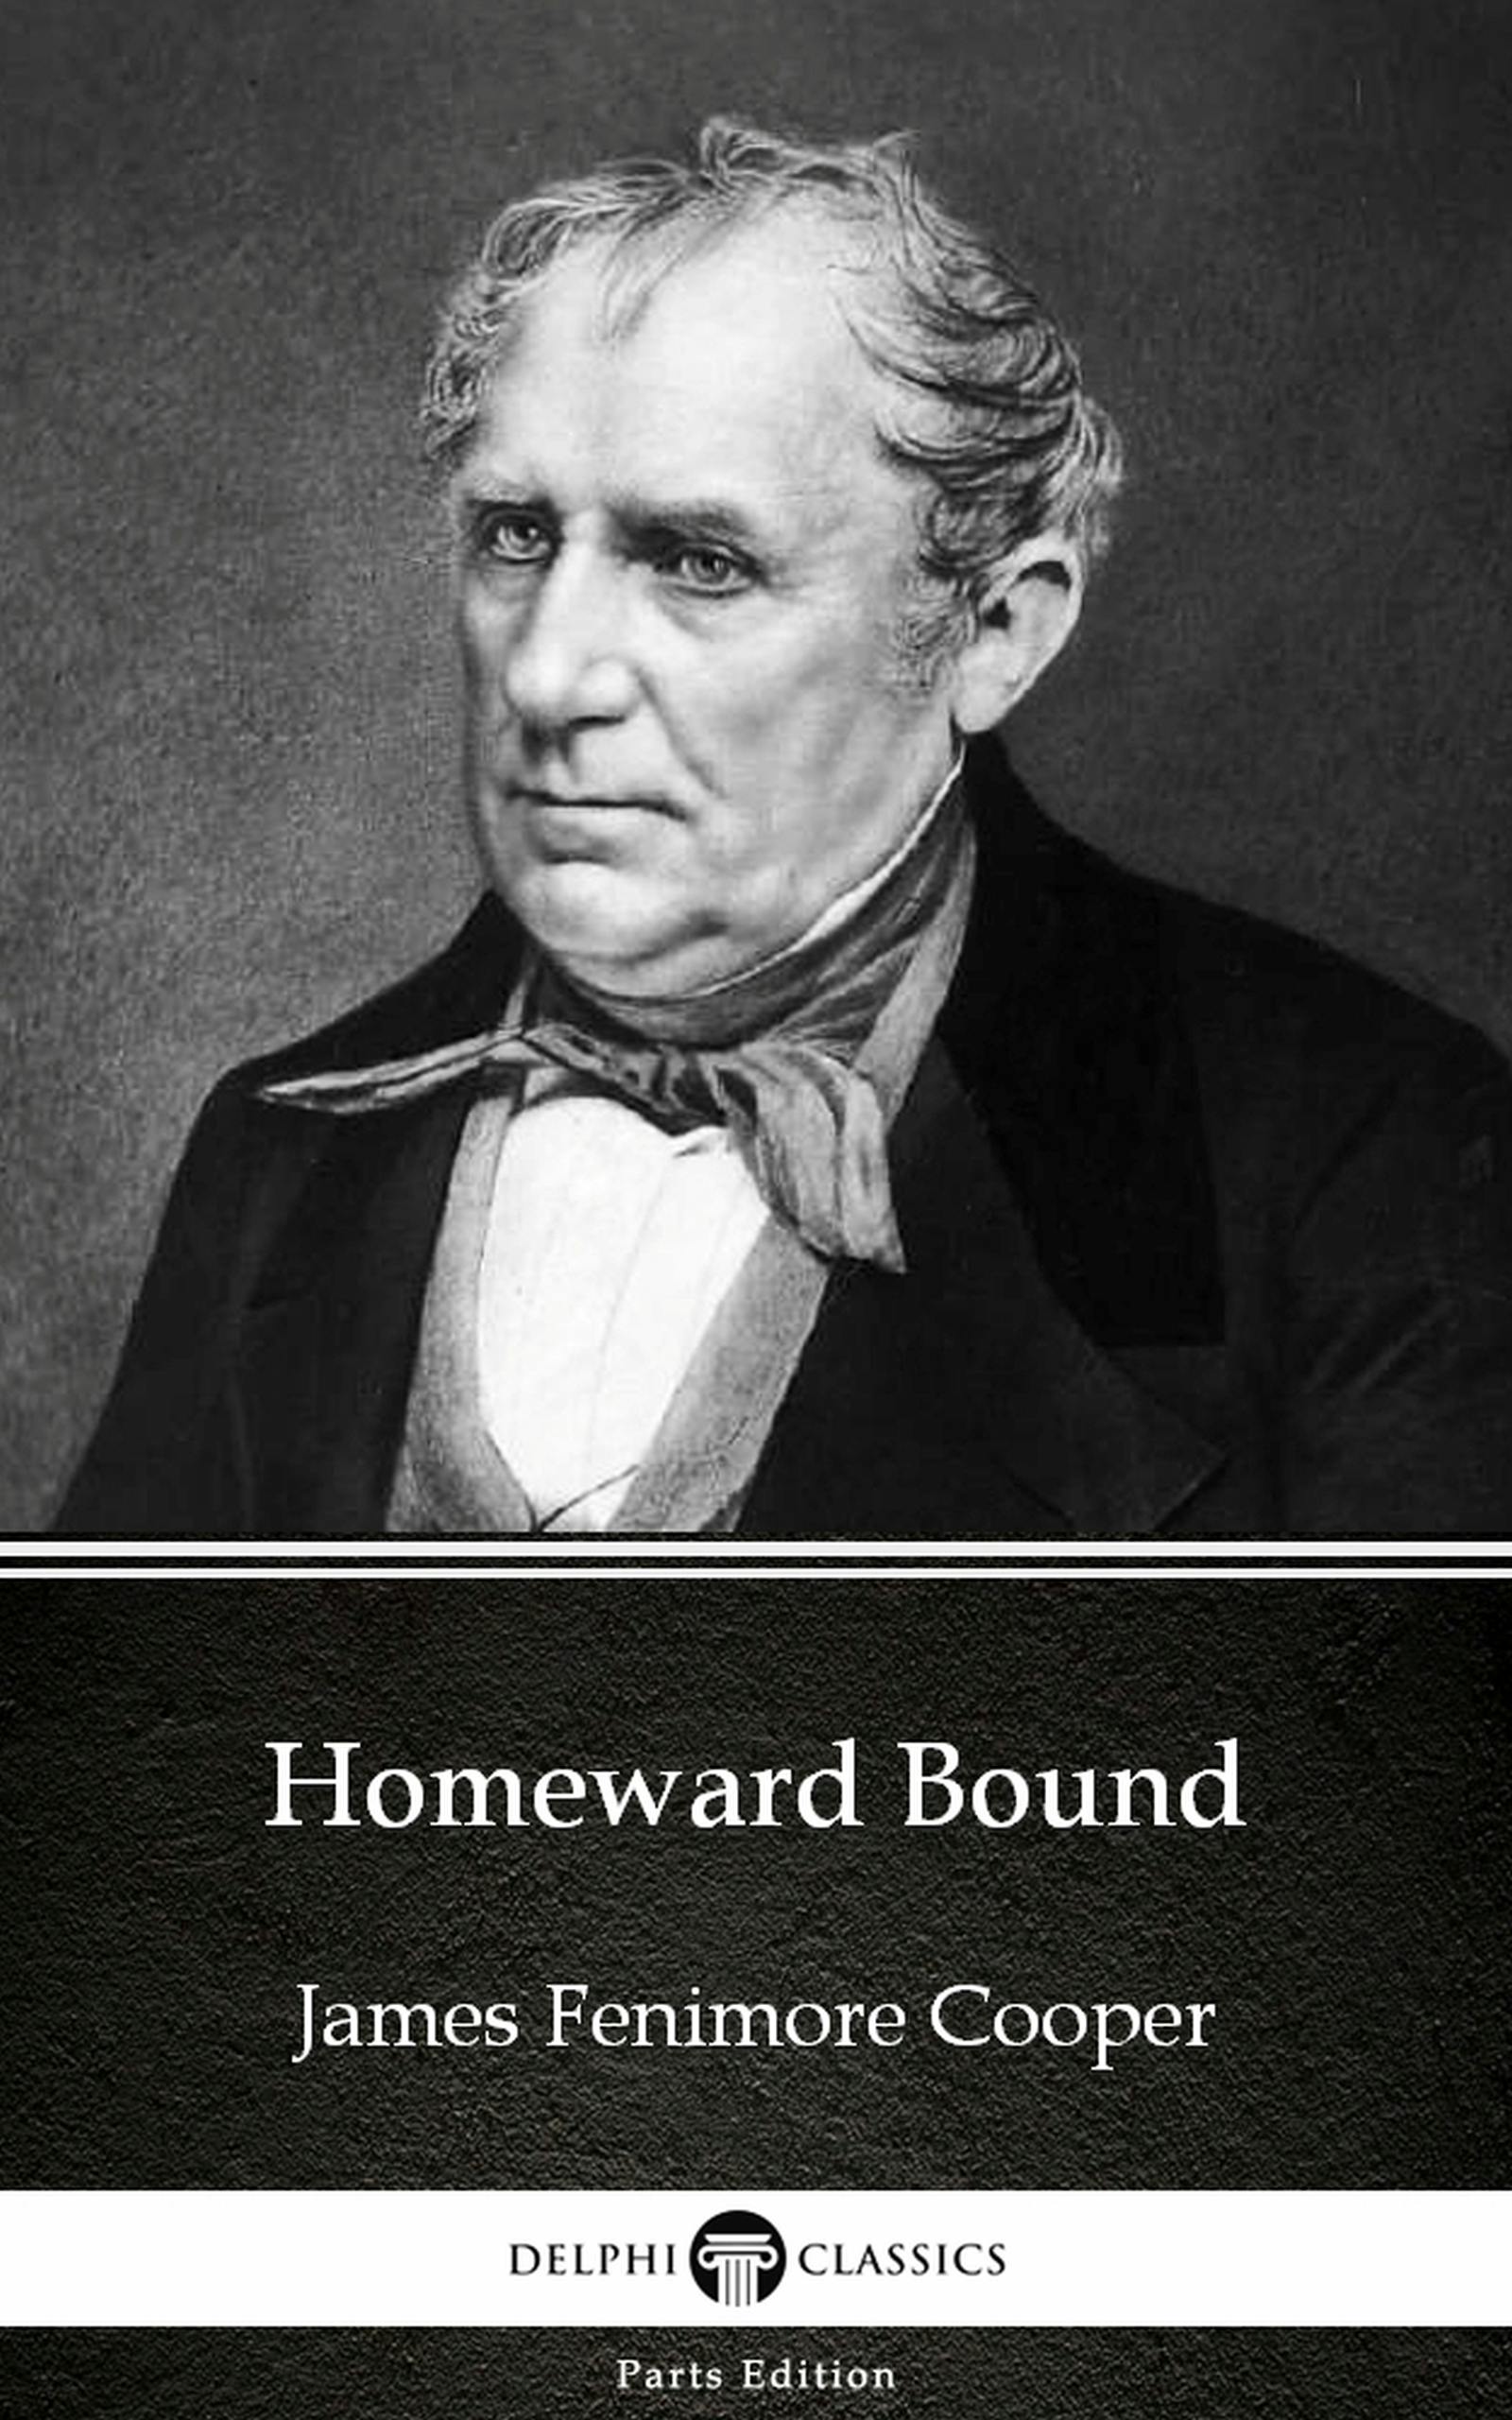 Homeward Bound by James Fenimore Cooper - Delphi Classics (Illustrated) - James Fenimore Cooper